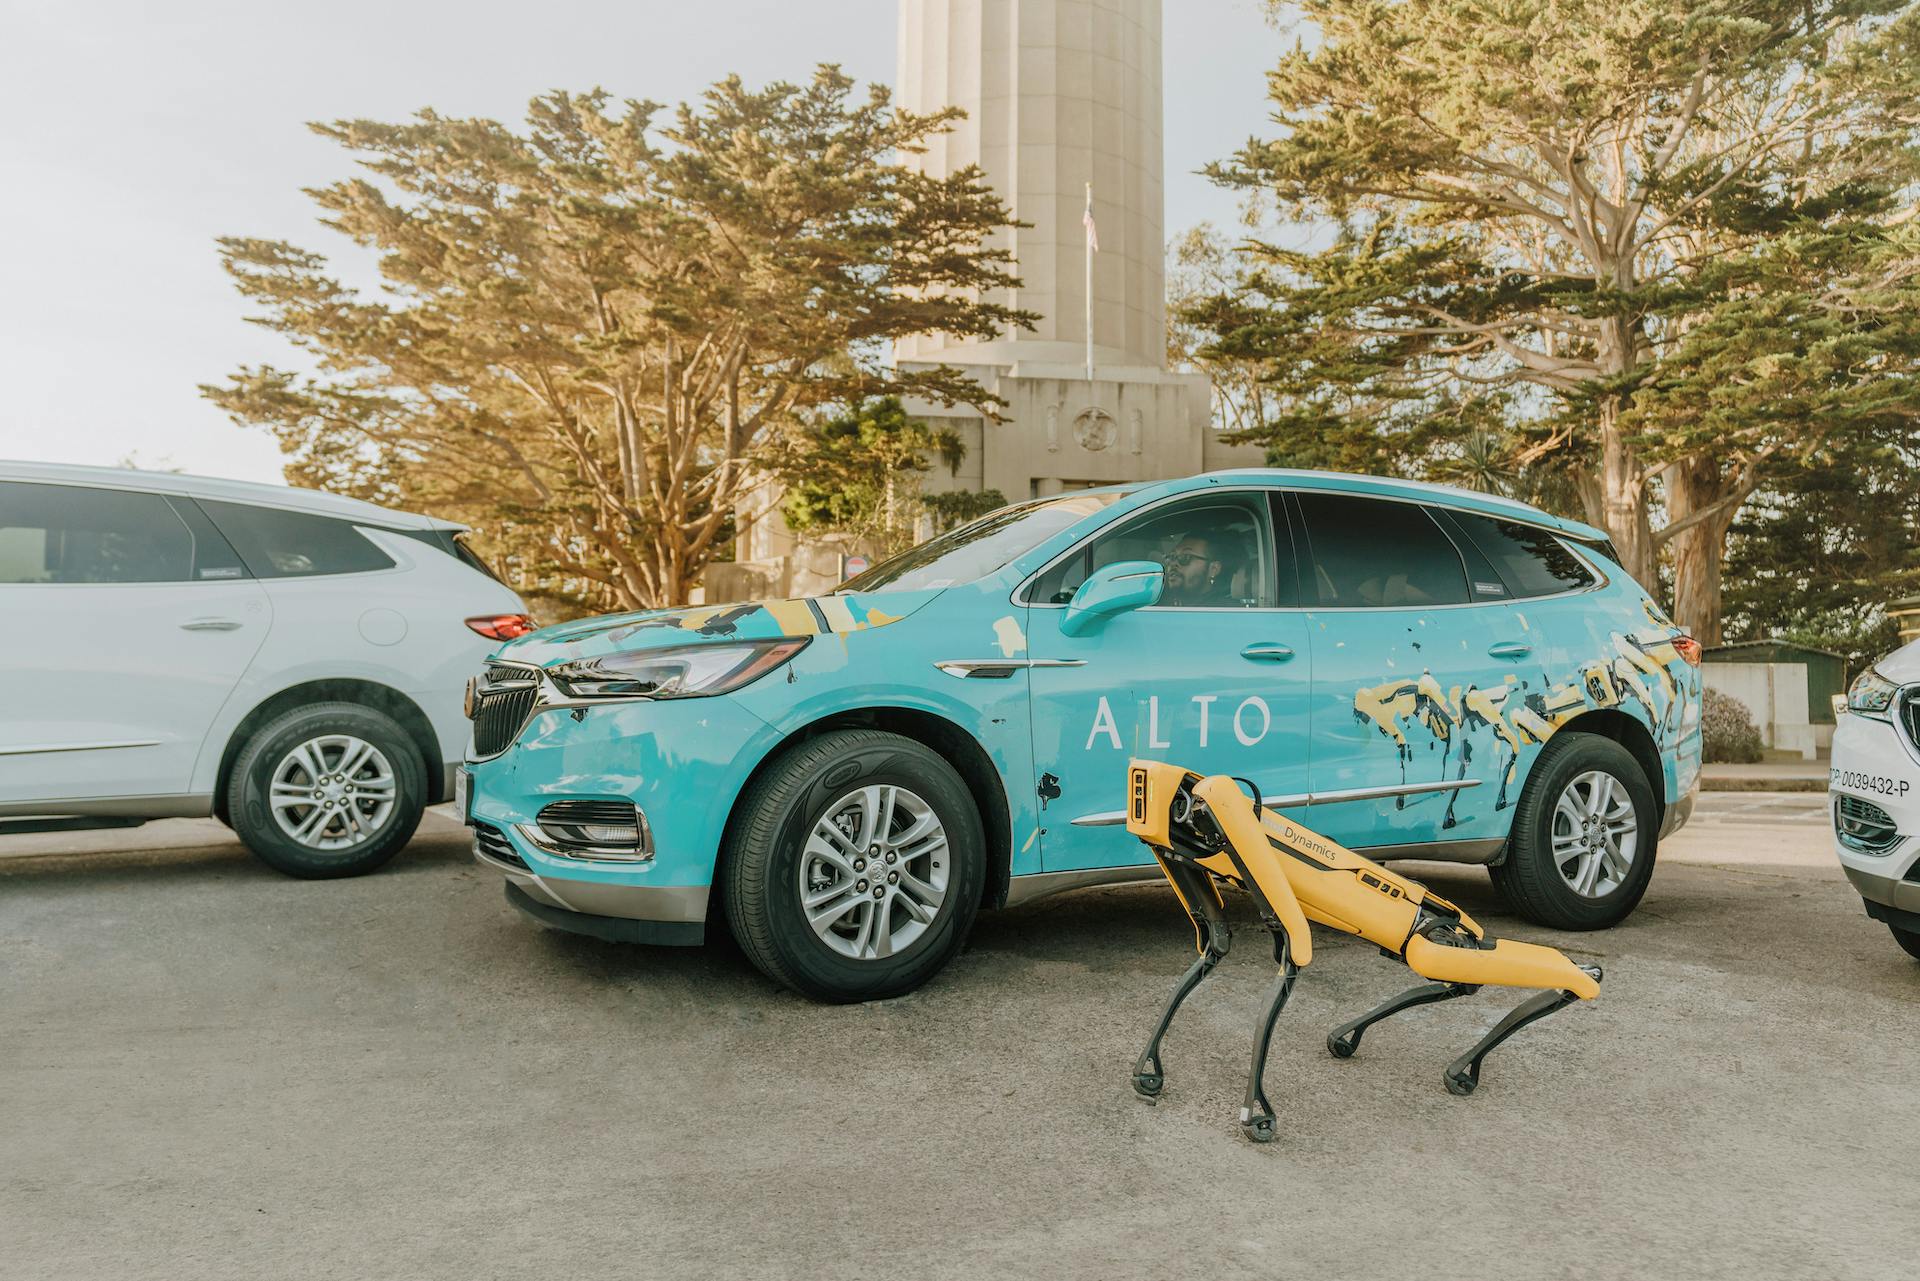 Boston Dynamics car wrap for Alto with Spot, the robot dog